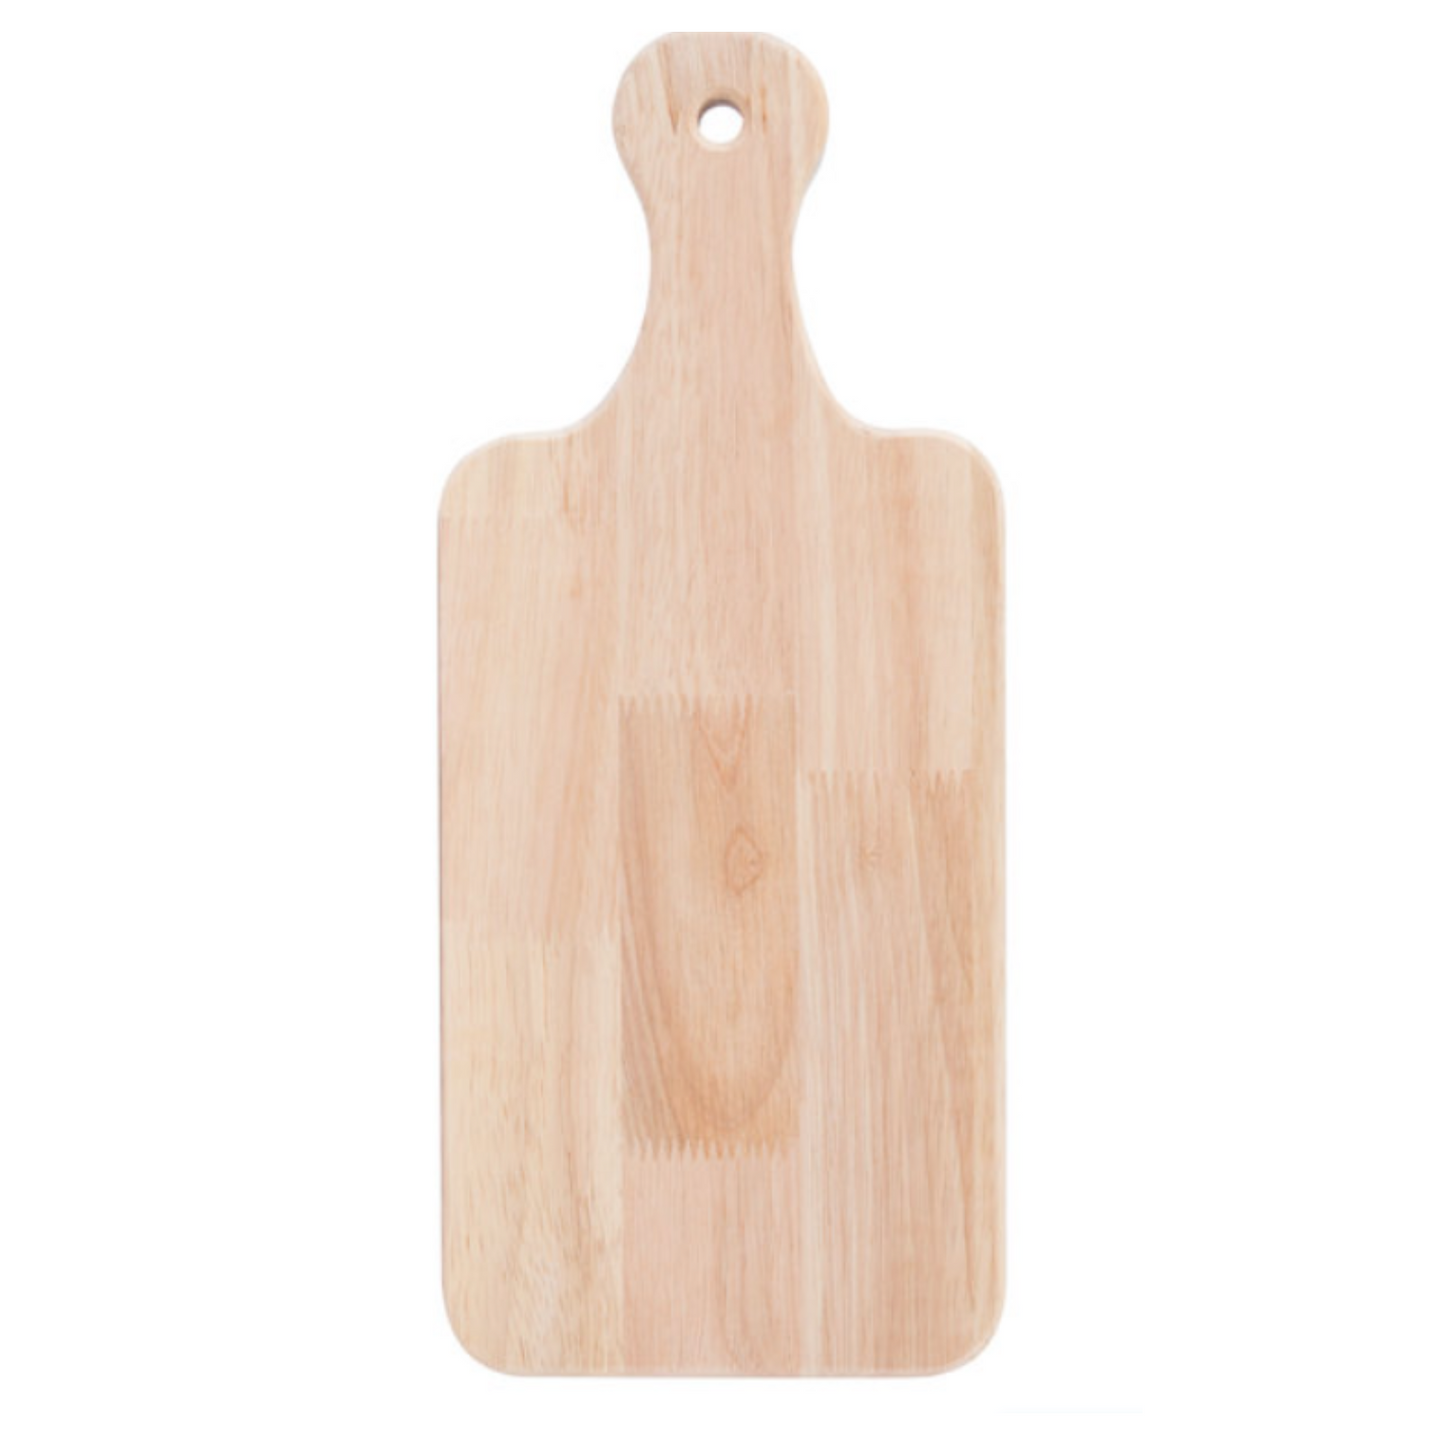 Wood Cutting Board- Charcuterie Board